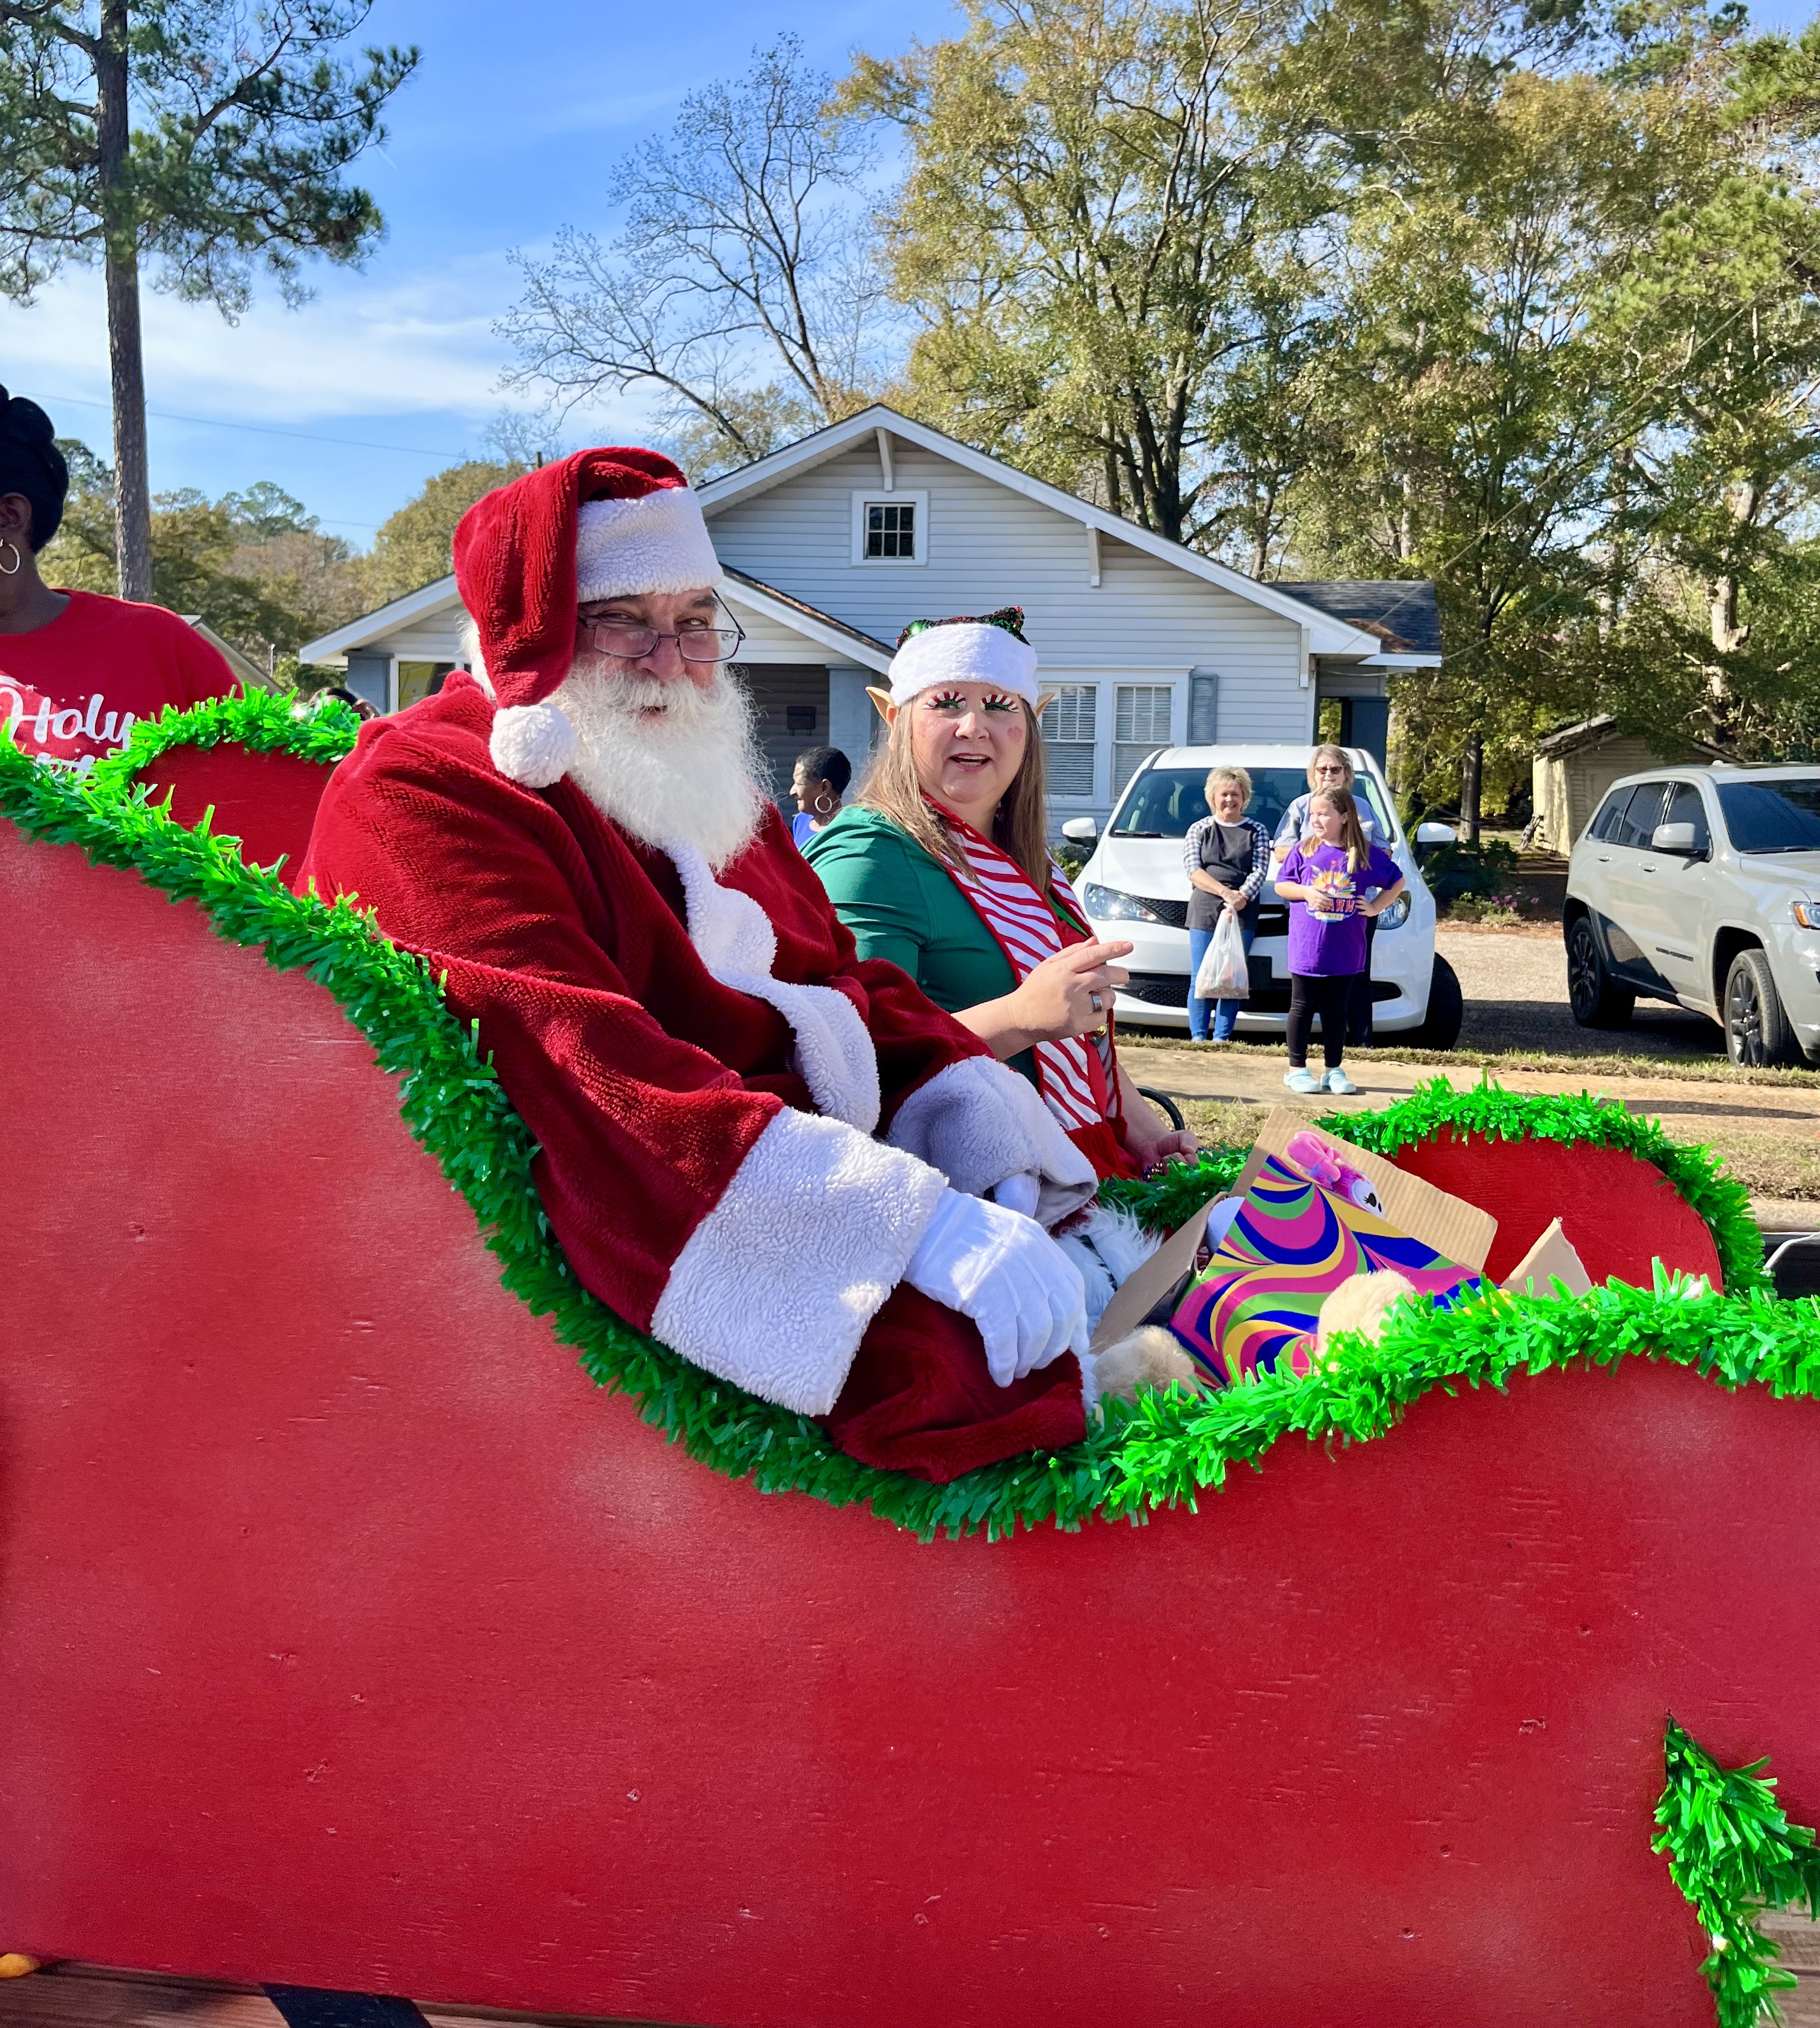 Monroeville's Annual Christmas Parade